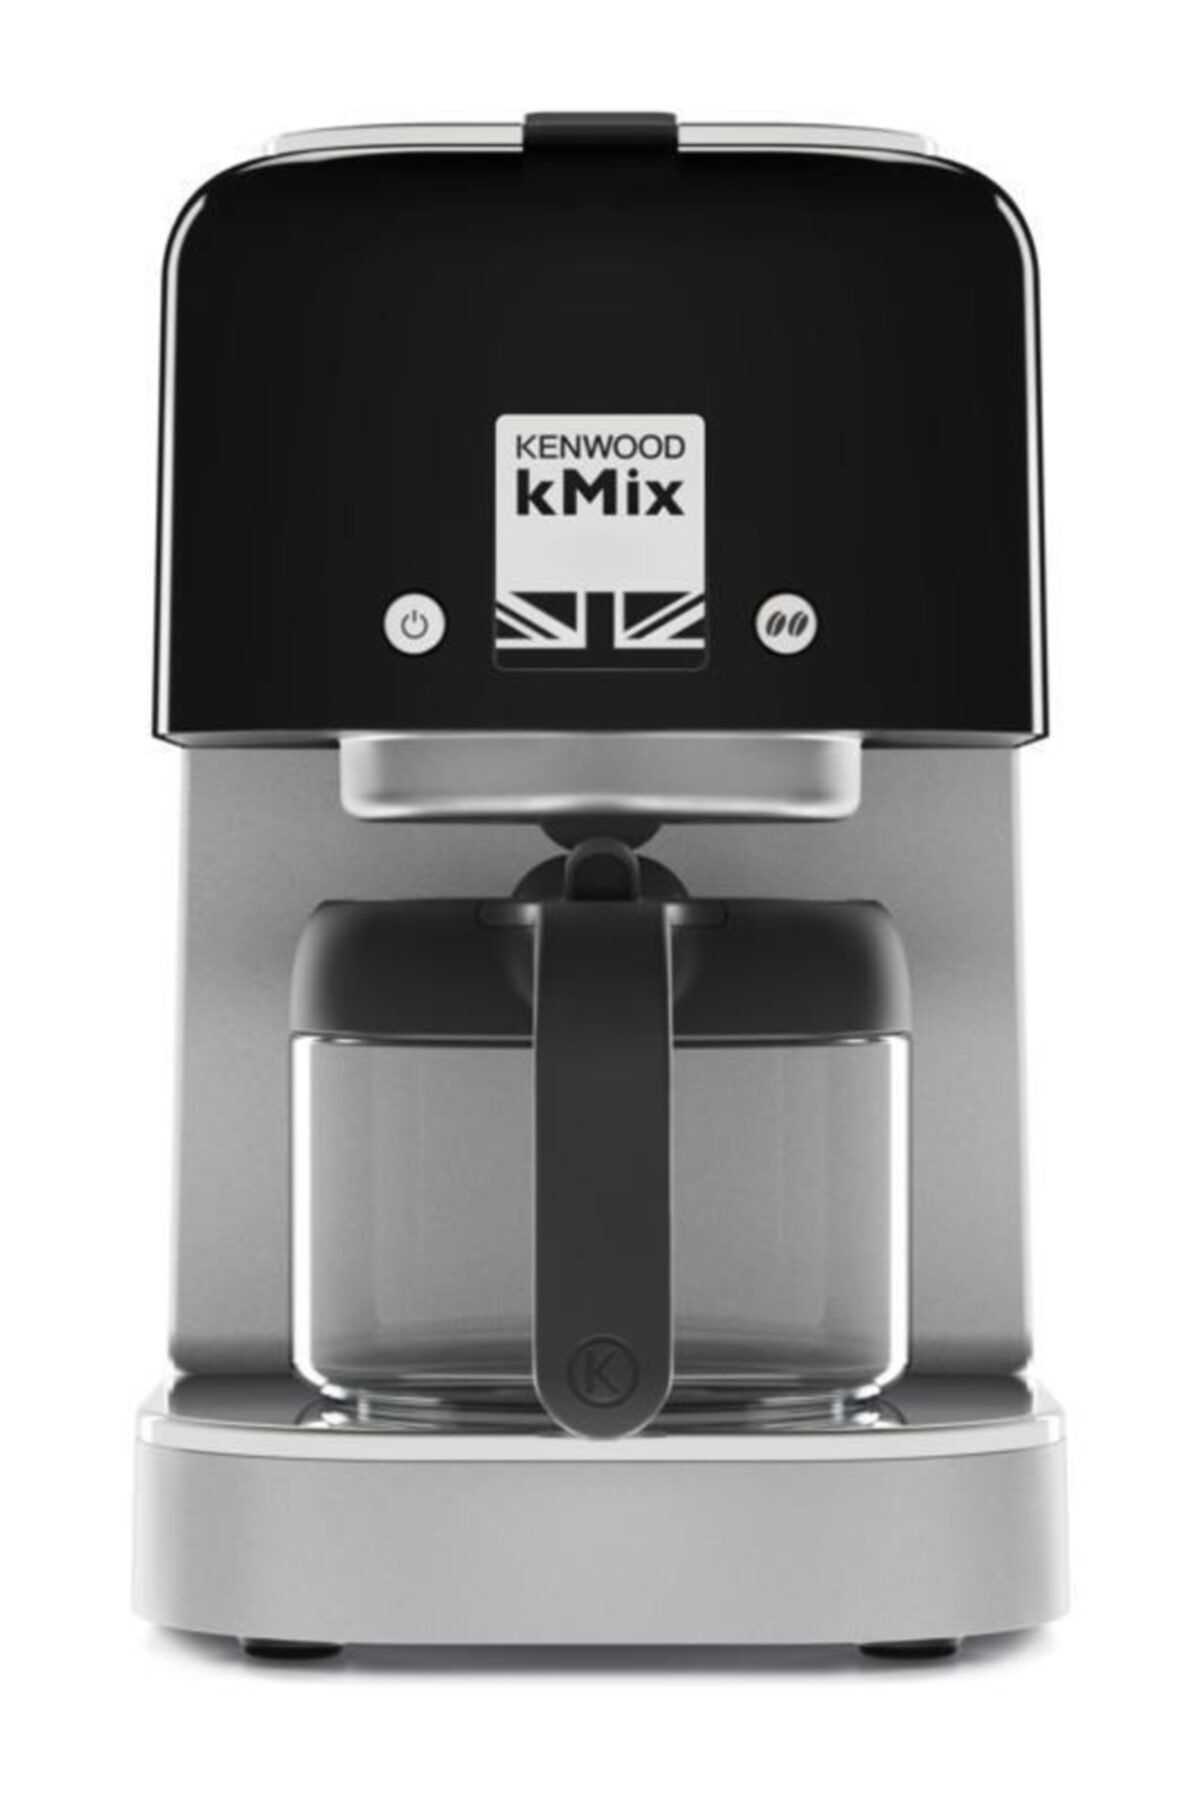 Kenwood Cox750bk Kmix Filtre Kahve Makinası - Siyah